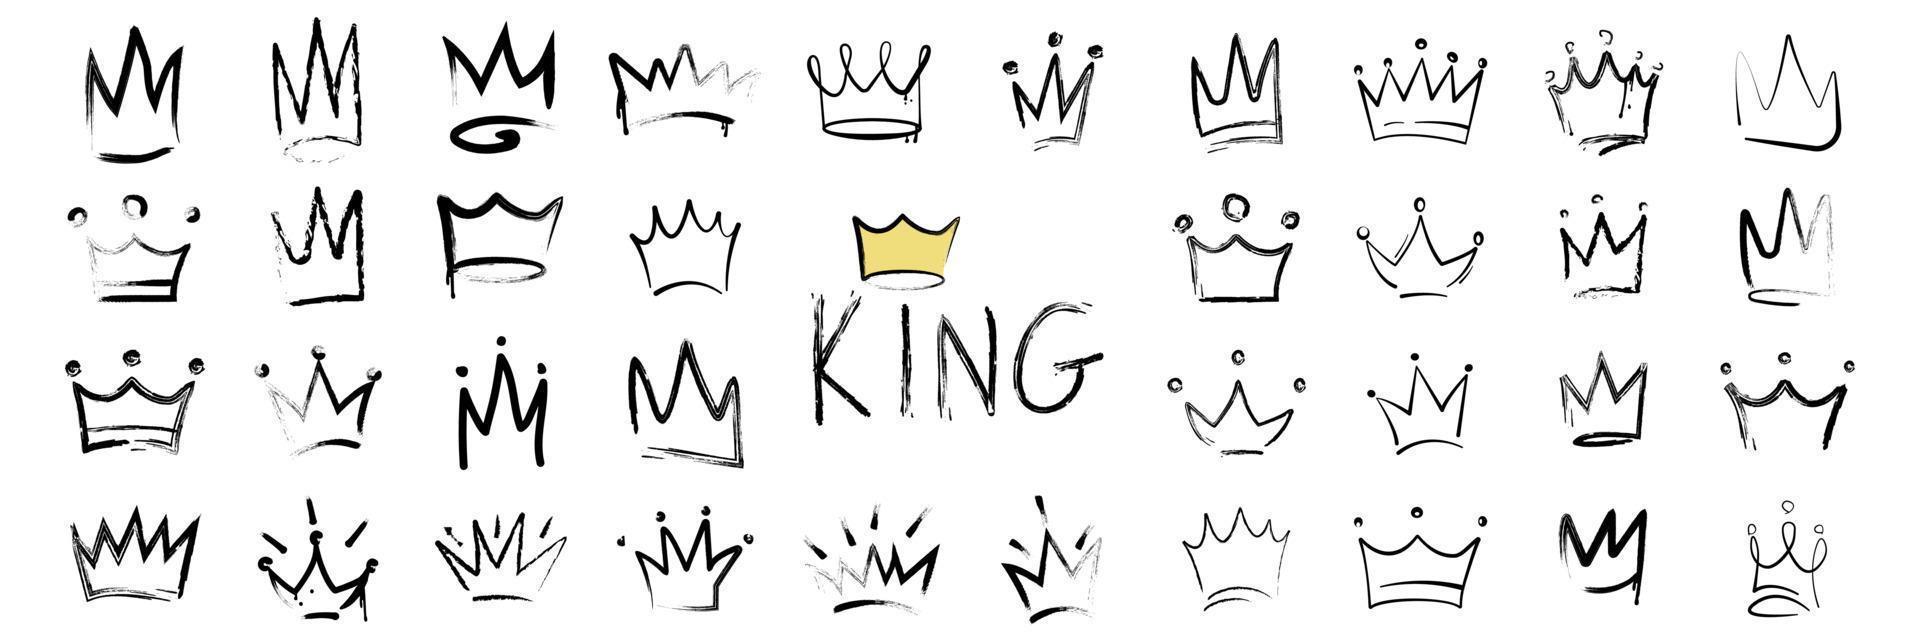 Crown graffiti logo icon set. Doodle style illustration vector